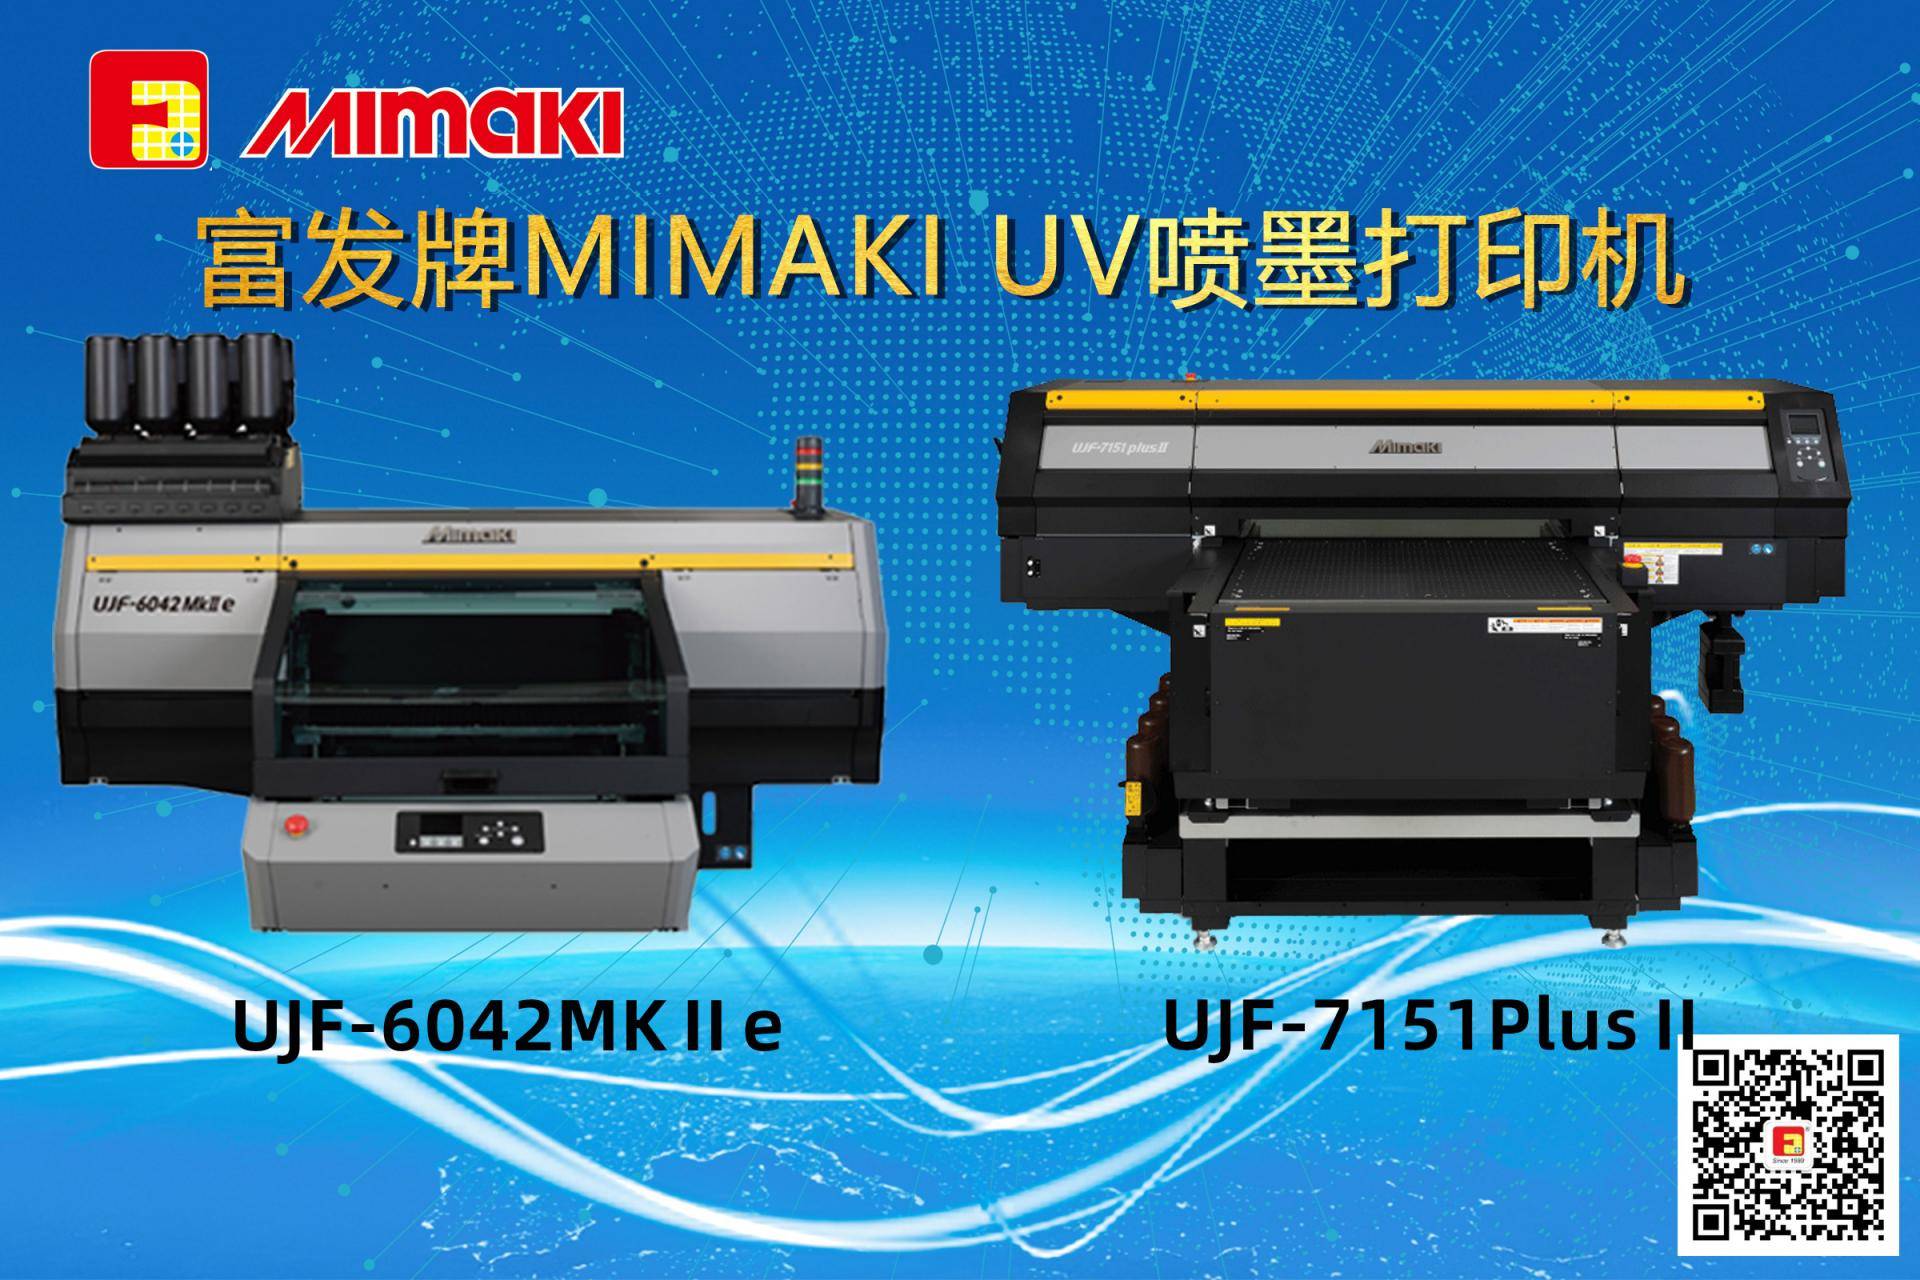 MIMAKI高端UV打印機丨進口打印機丨噴墨打印機